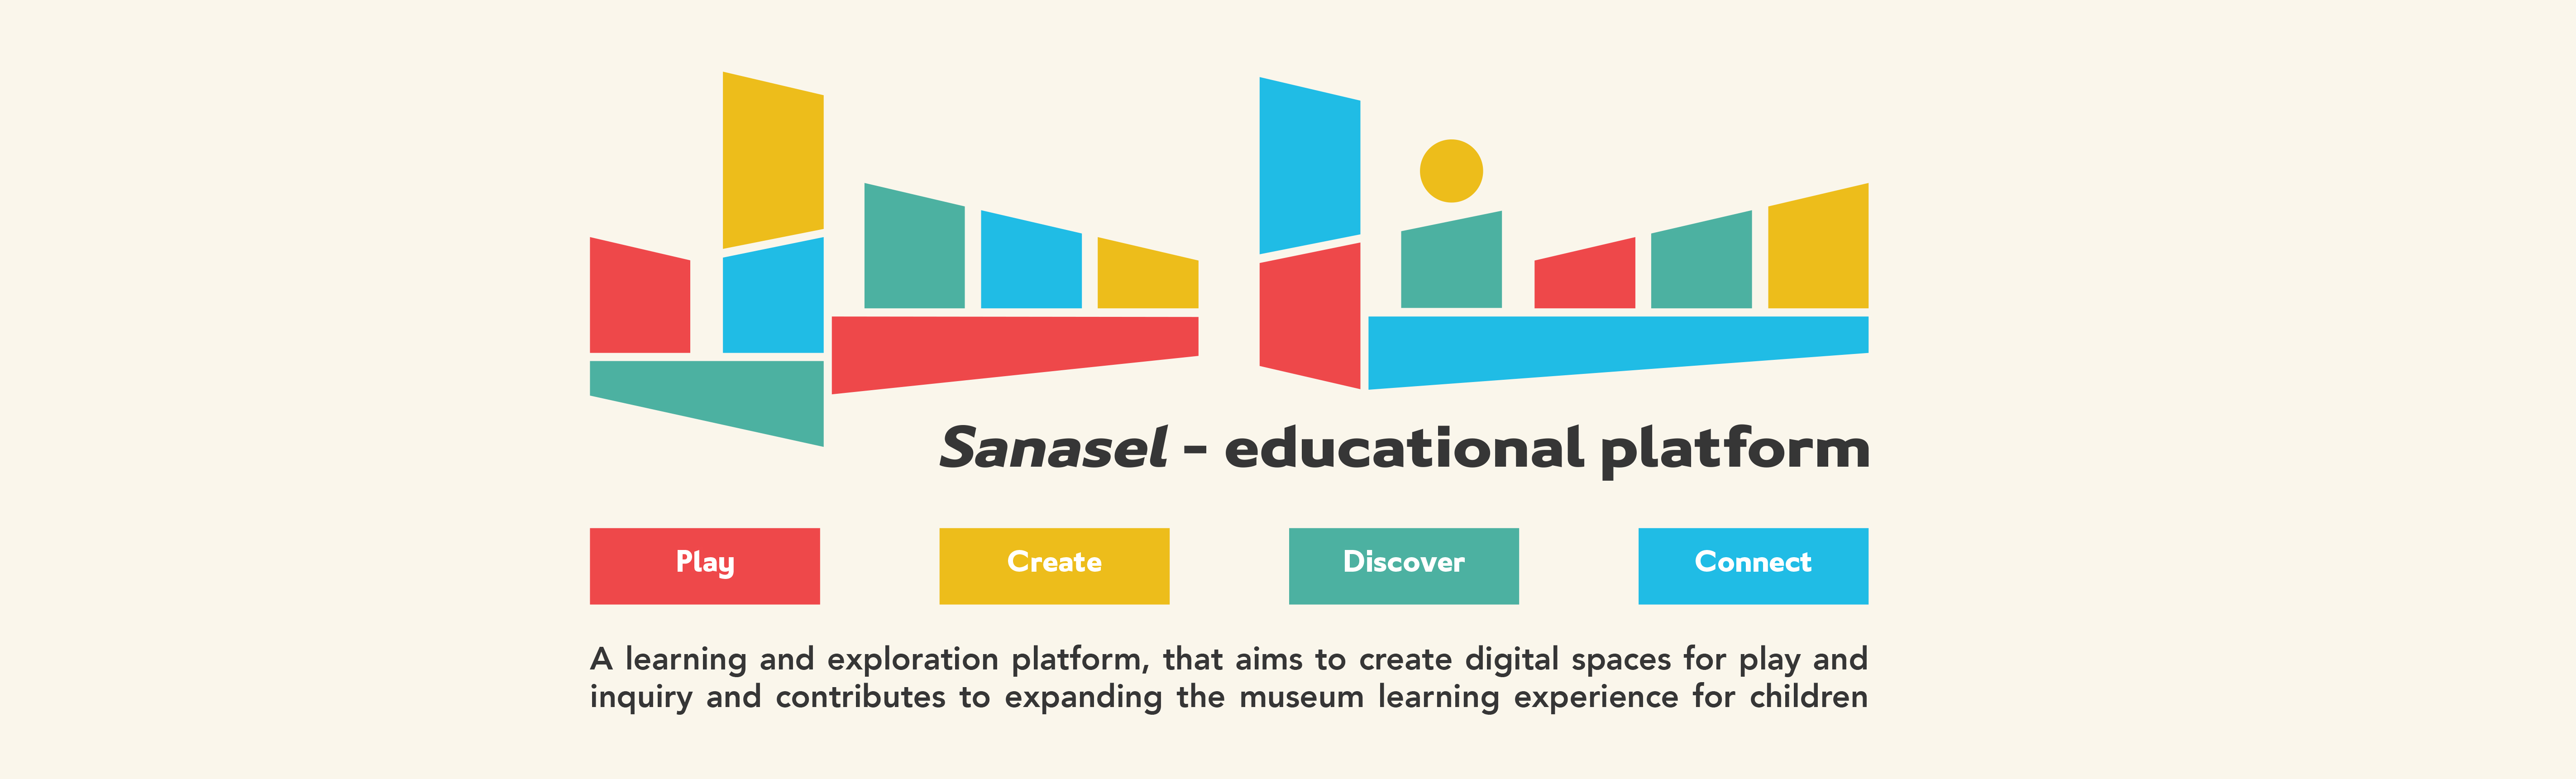 Sanasel - educational platform